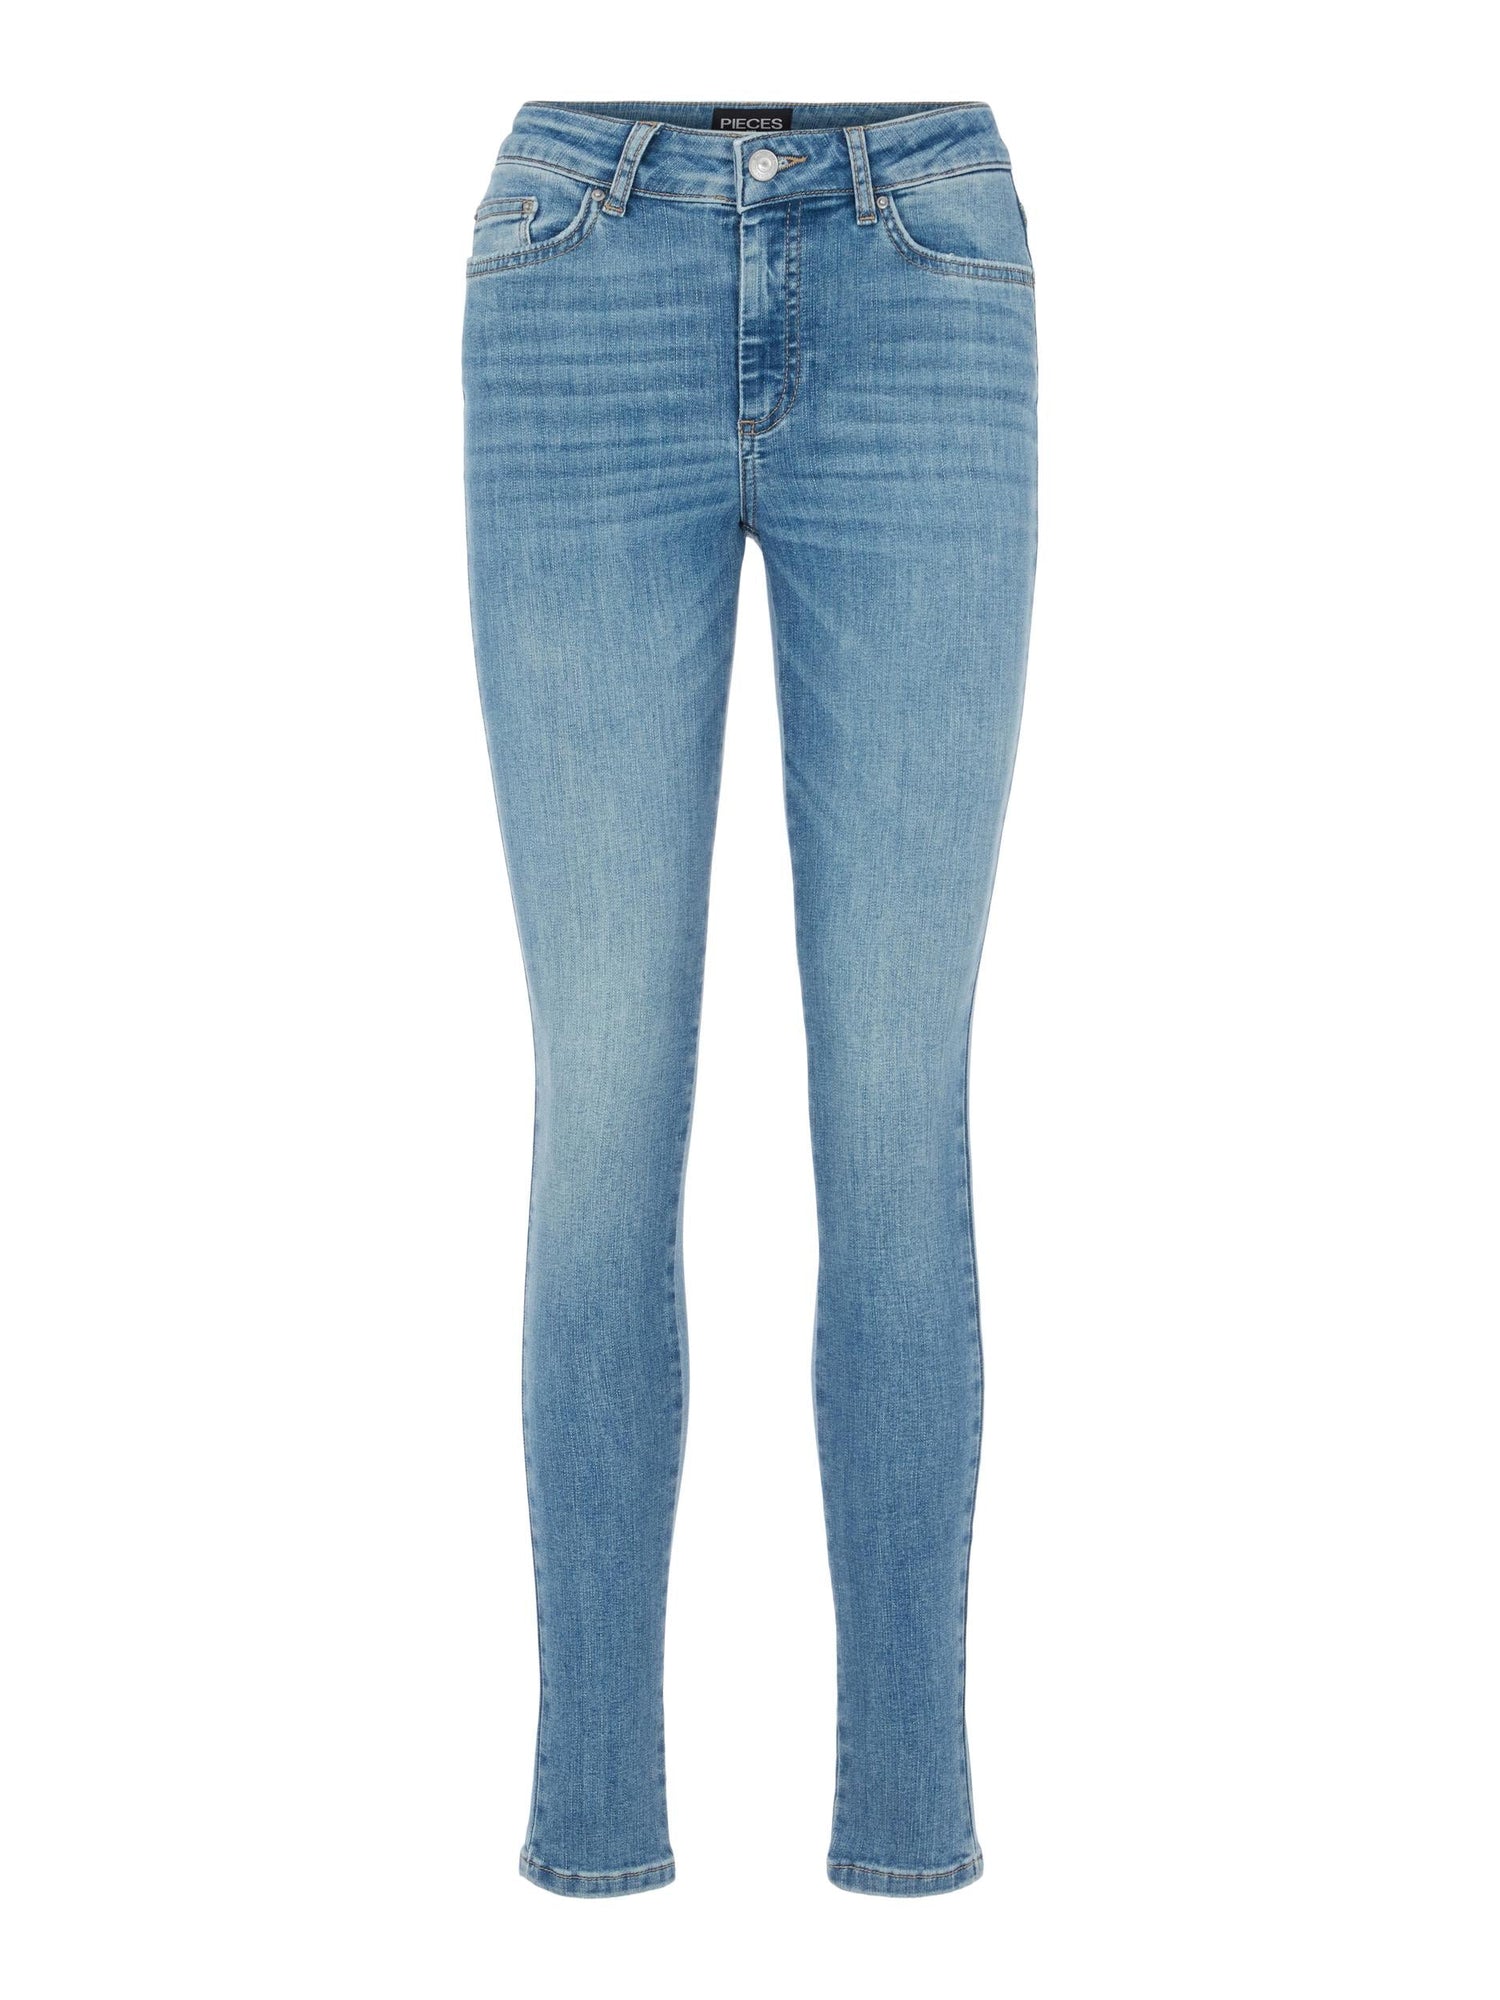 Delly Skinny Jeans | Light Blue | Petite Pants Pieces XL - UK 14 